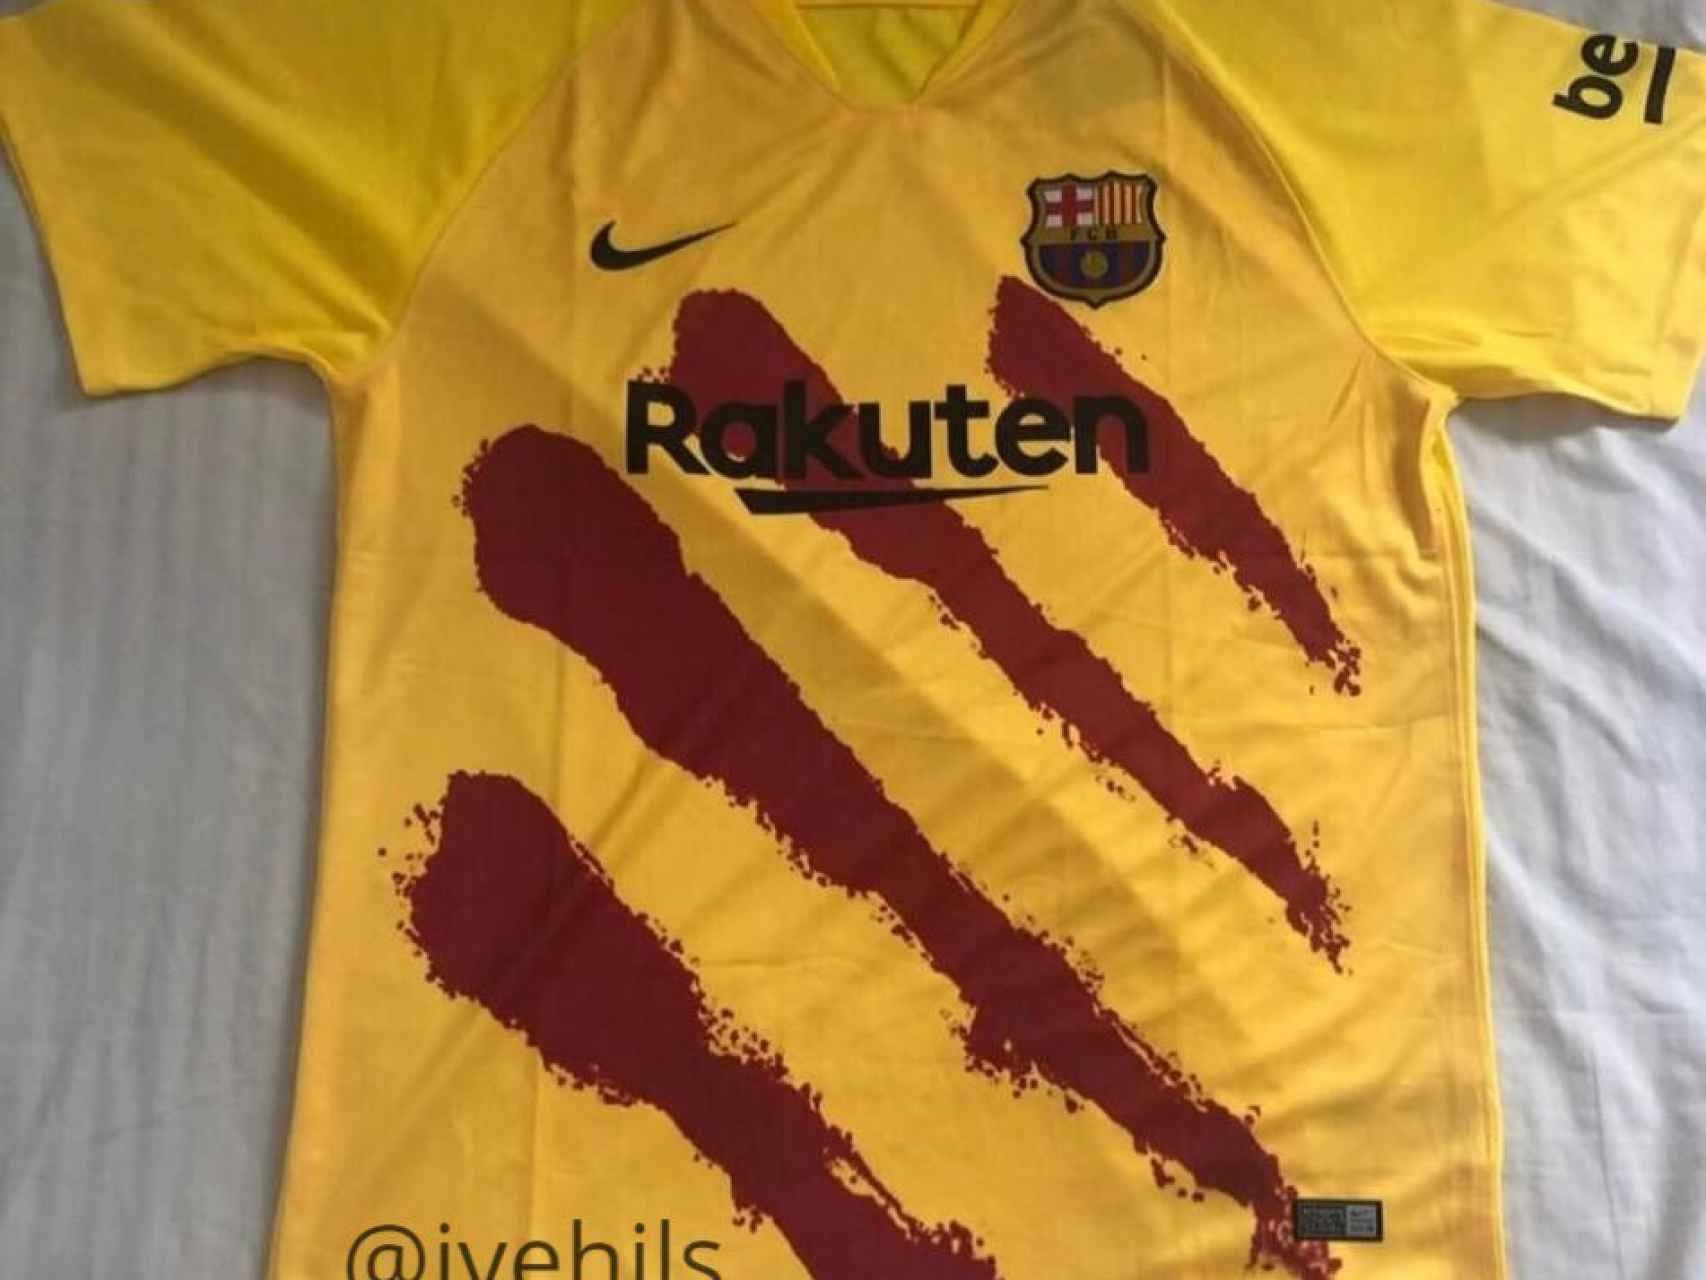 La cuarta camiseta del Barcelona para la próxima temporada. Foto: Twitter (@jvehils)